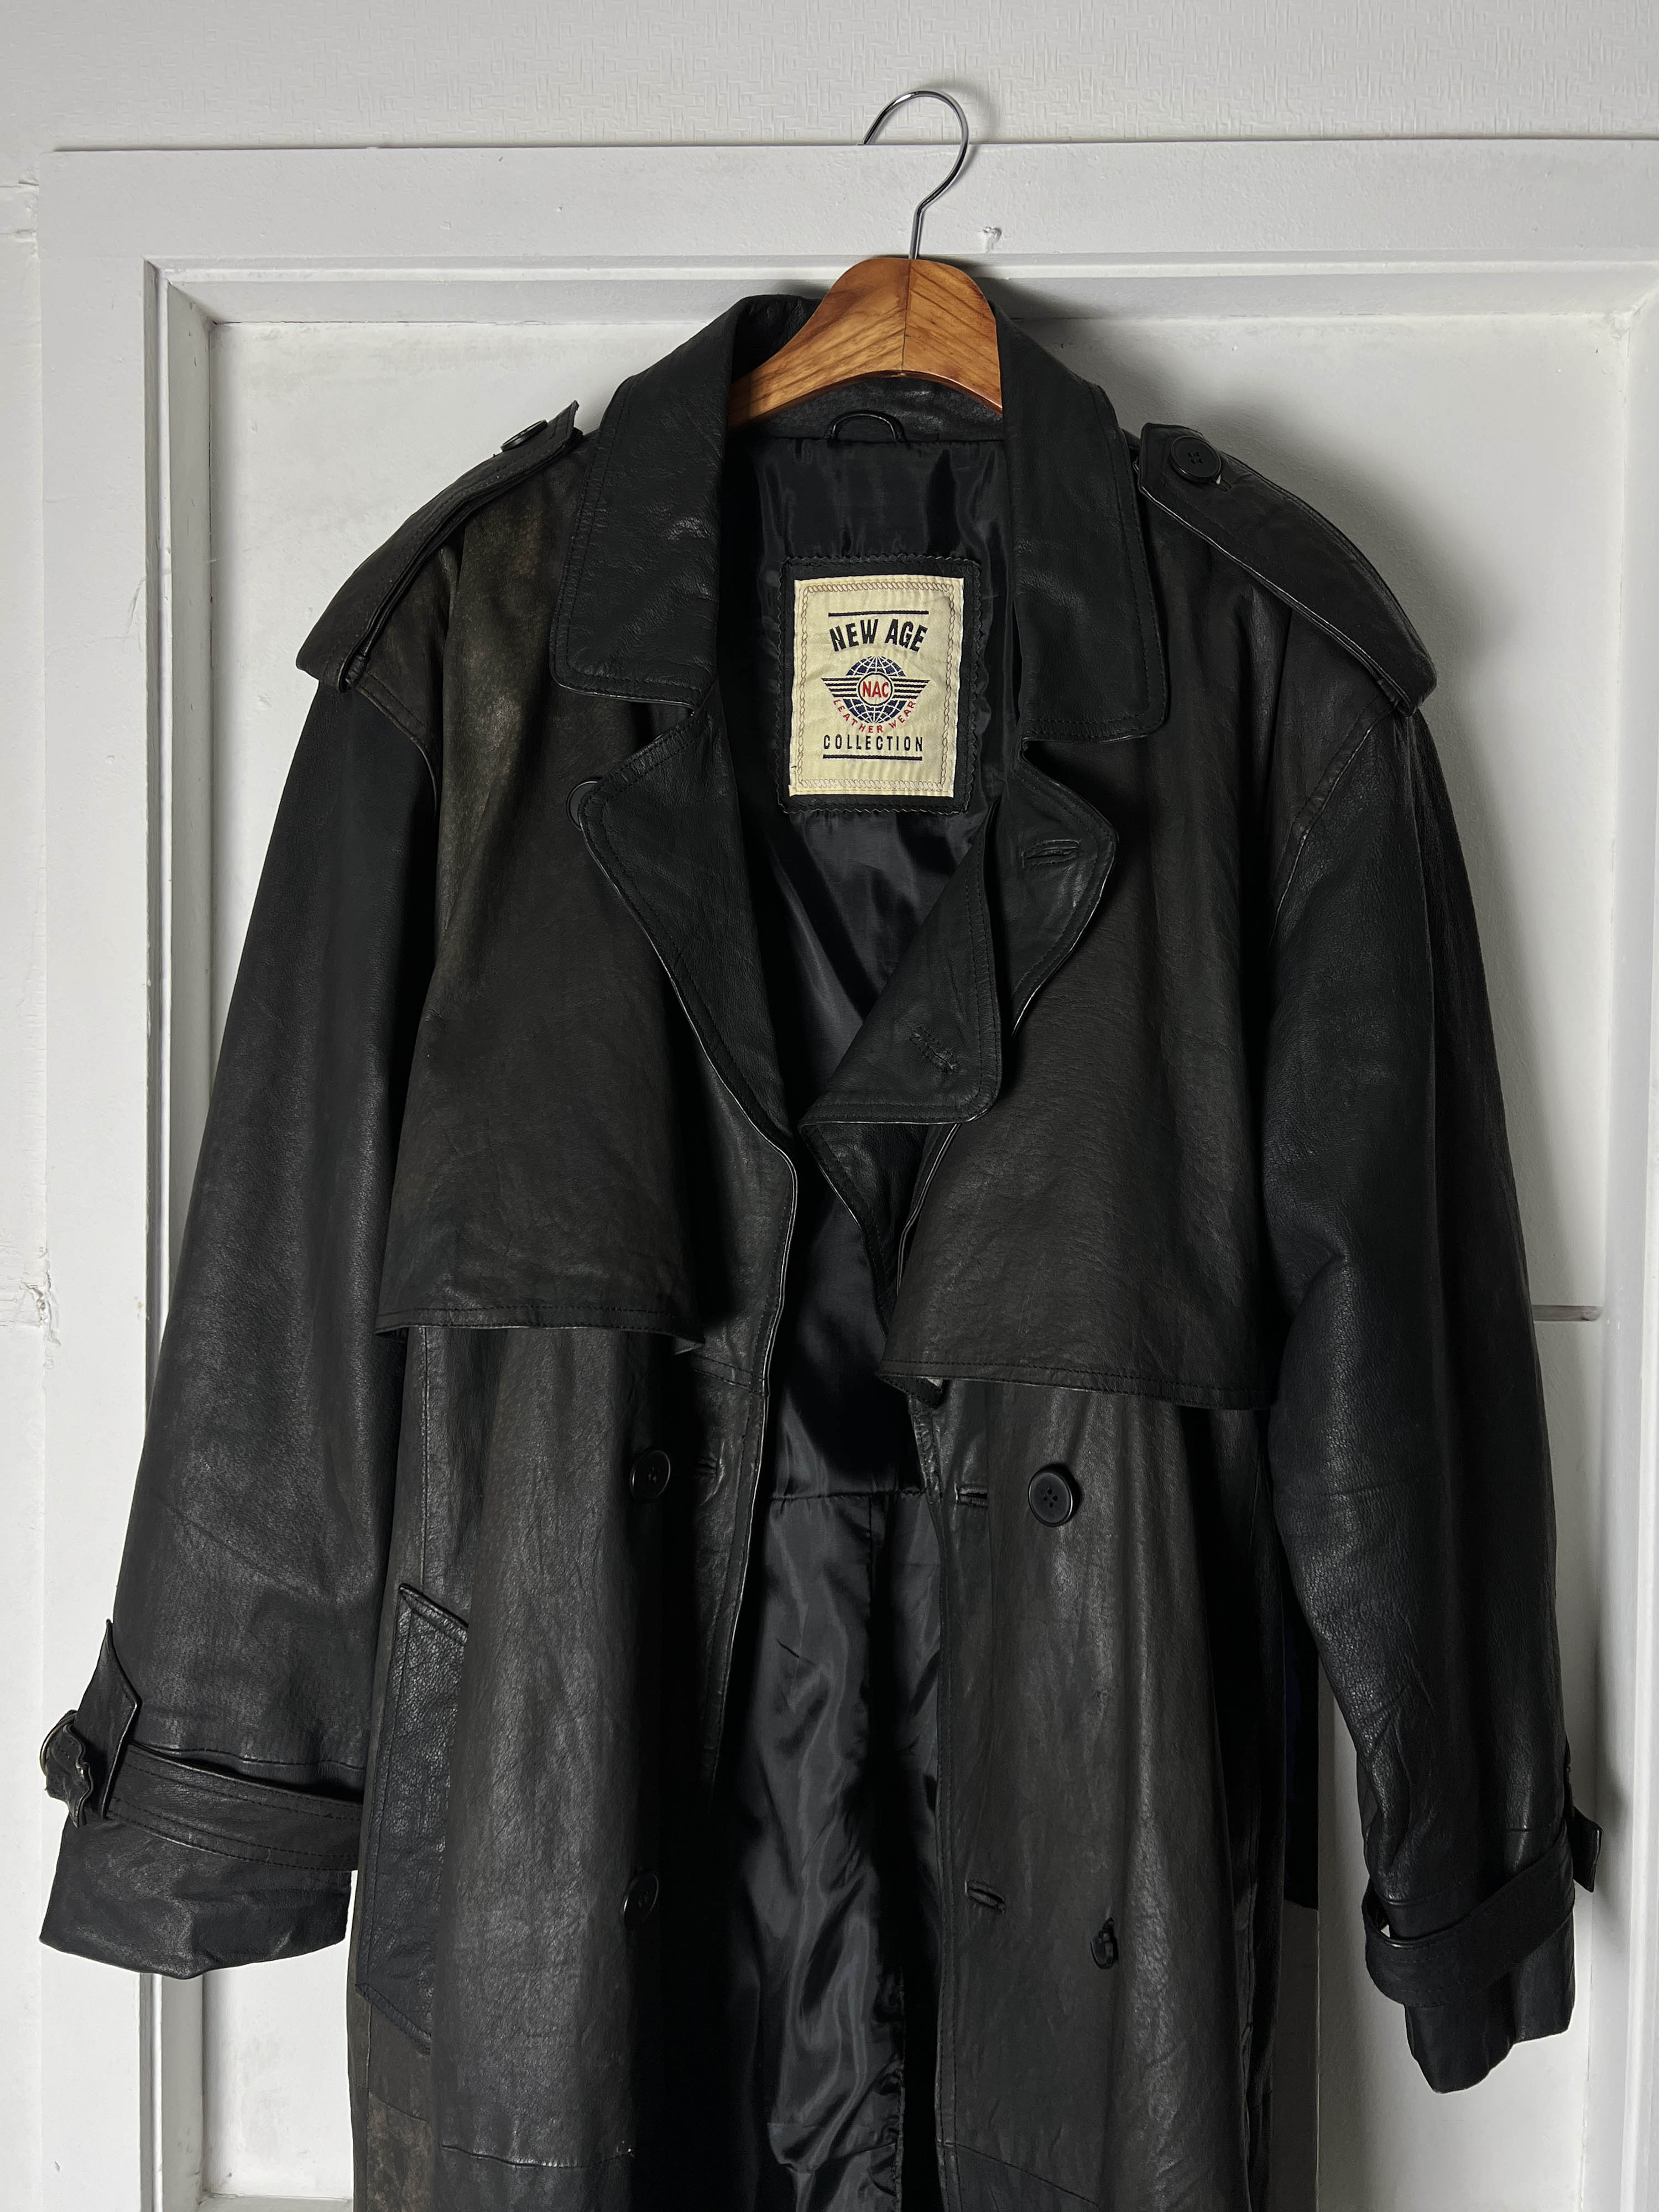 NEW AGE leather coat